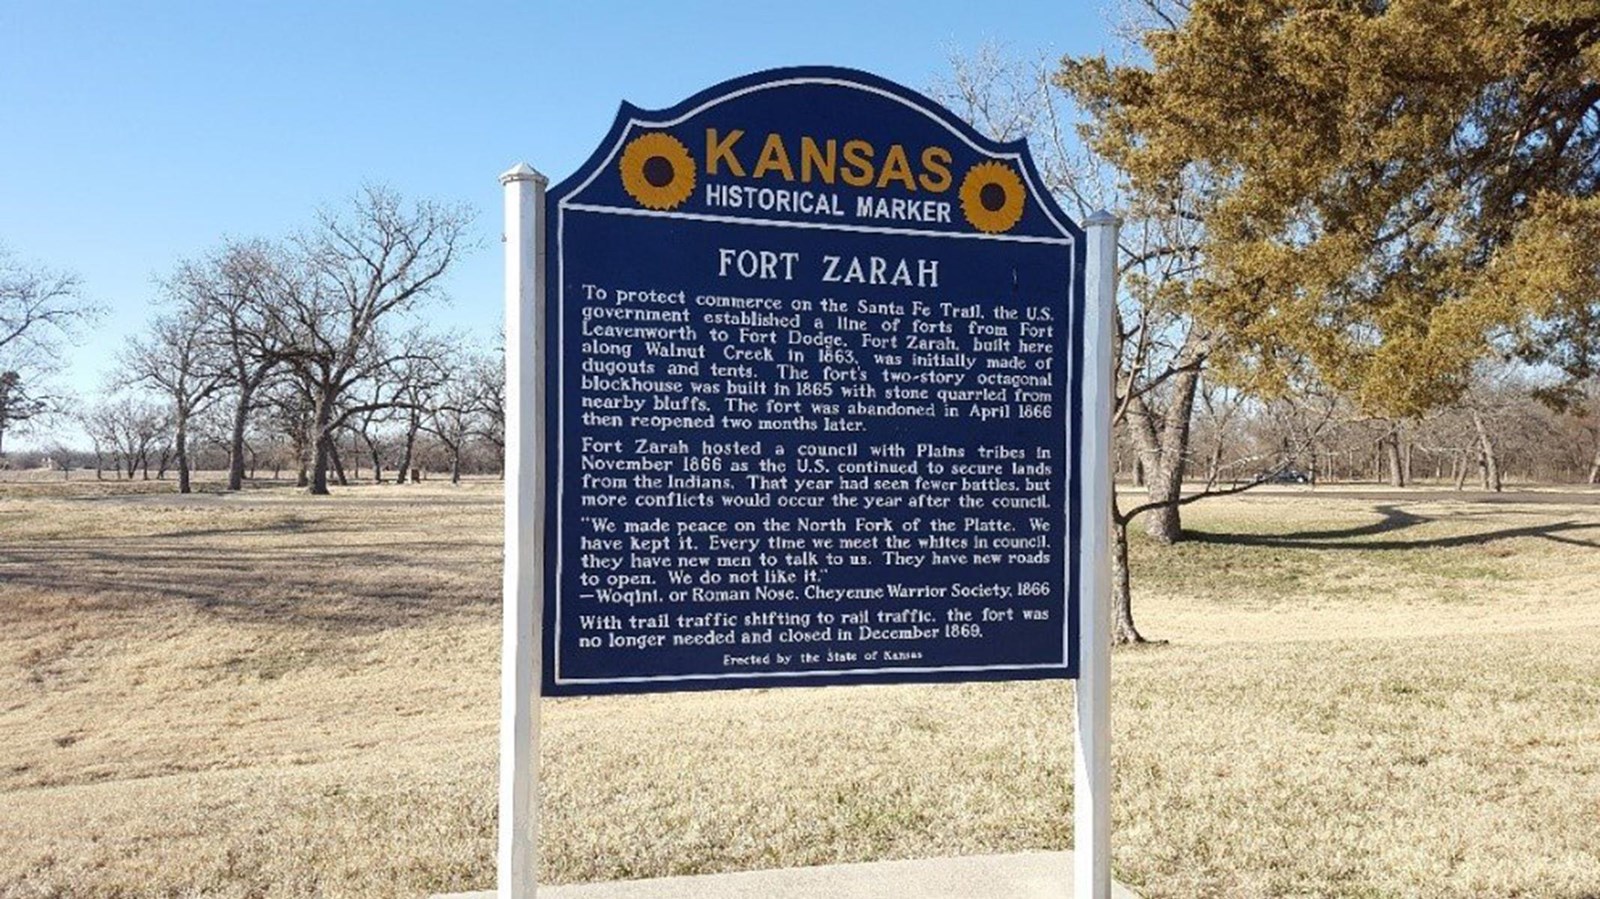 A Kansas Historical Marker in a grassy field